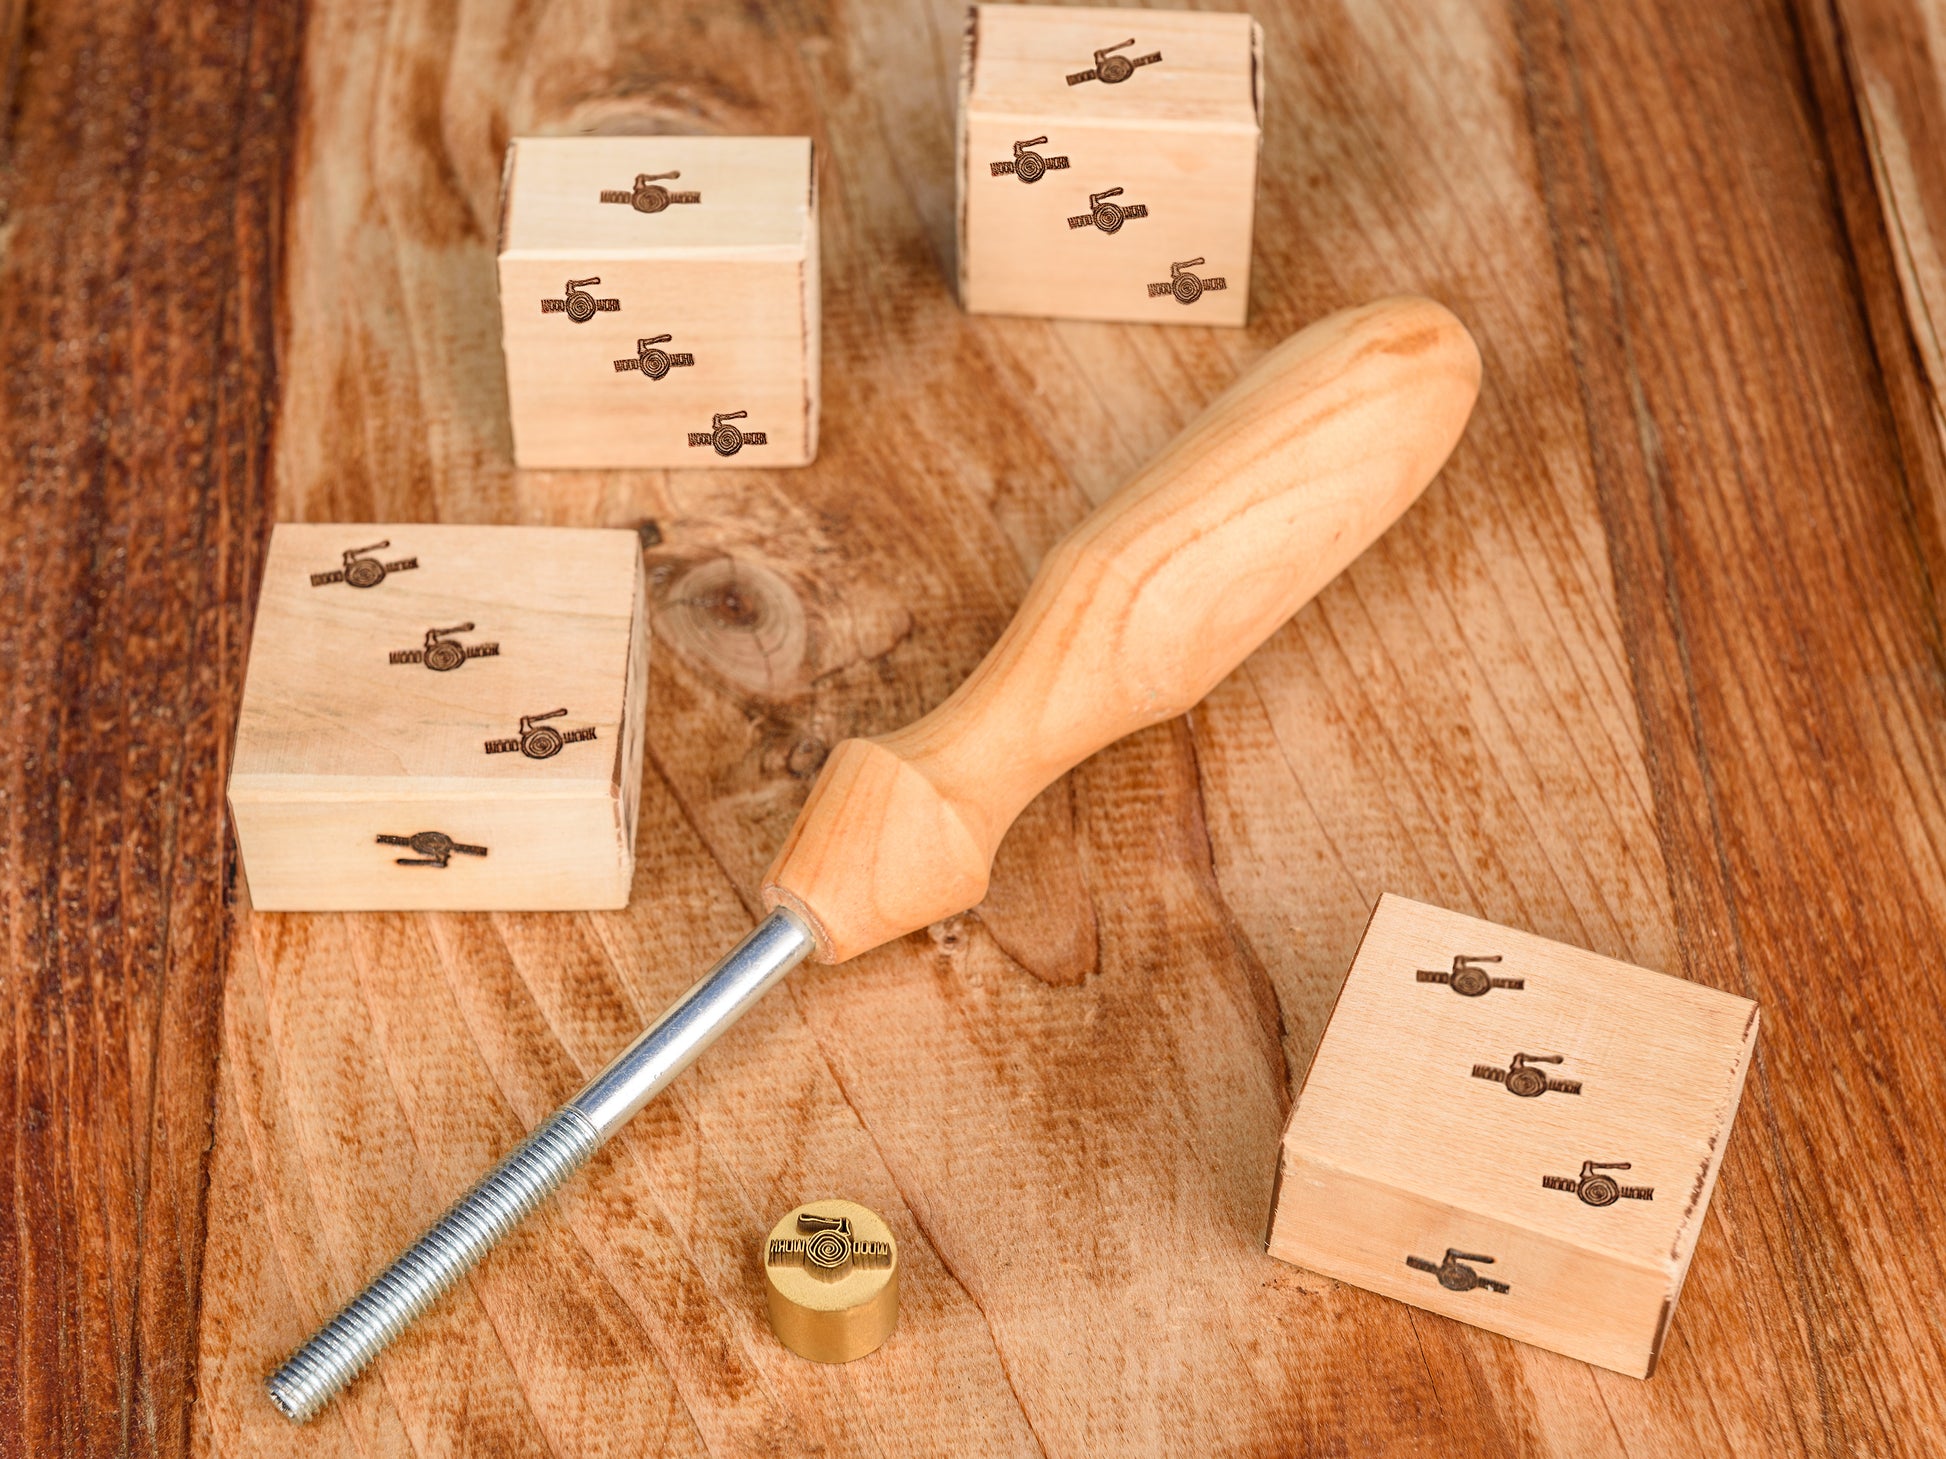 Deironply Wood Branding Iron Personalized - Custom Branding Iron for Wood  Brass Stamp and Wood Handle Wood Burning Stamp Personalized Perfect Craft